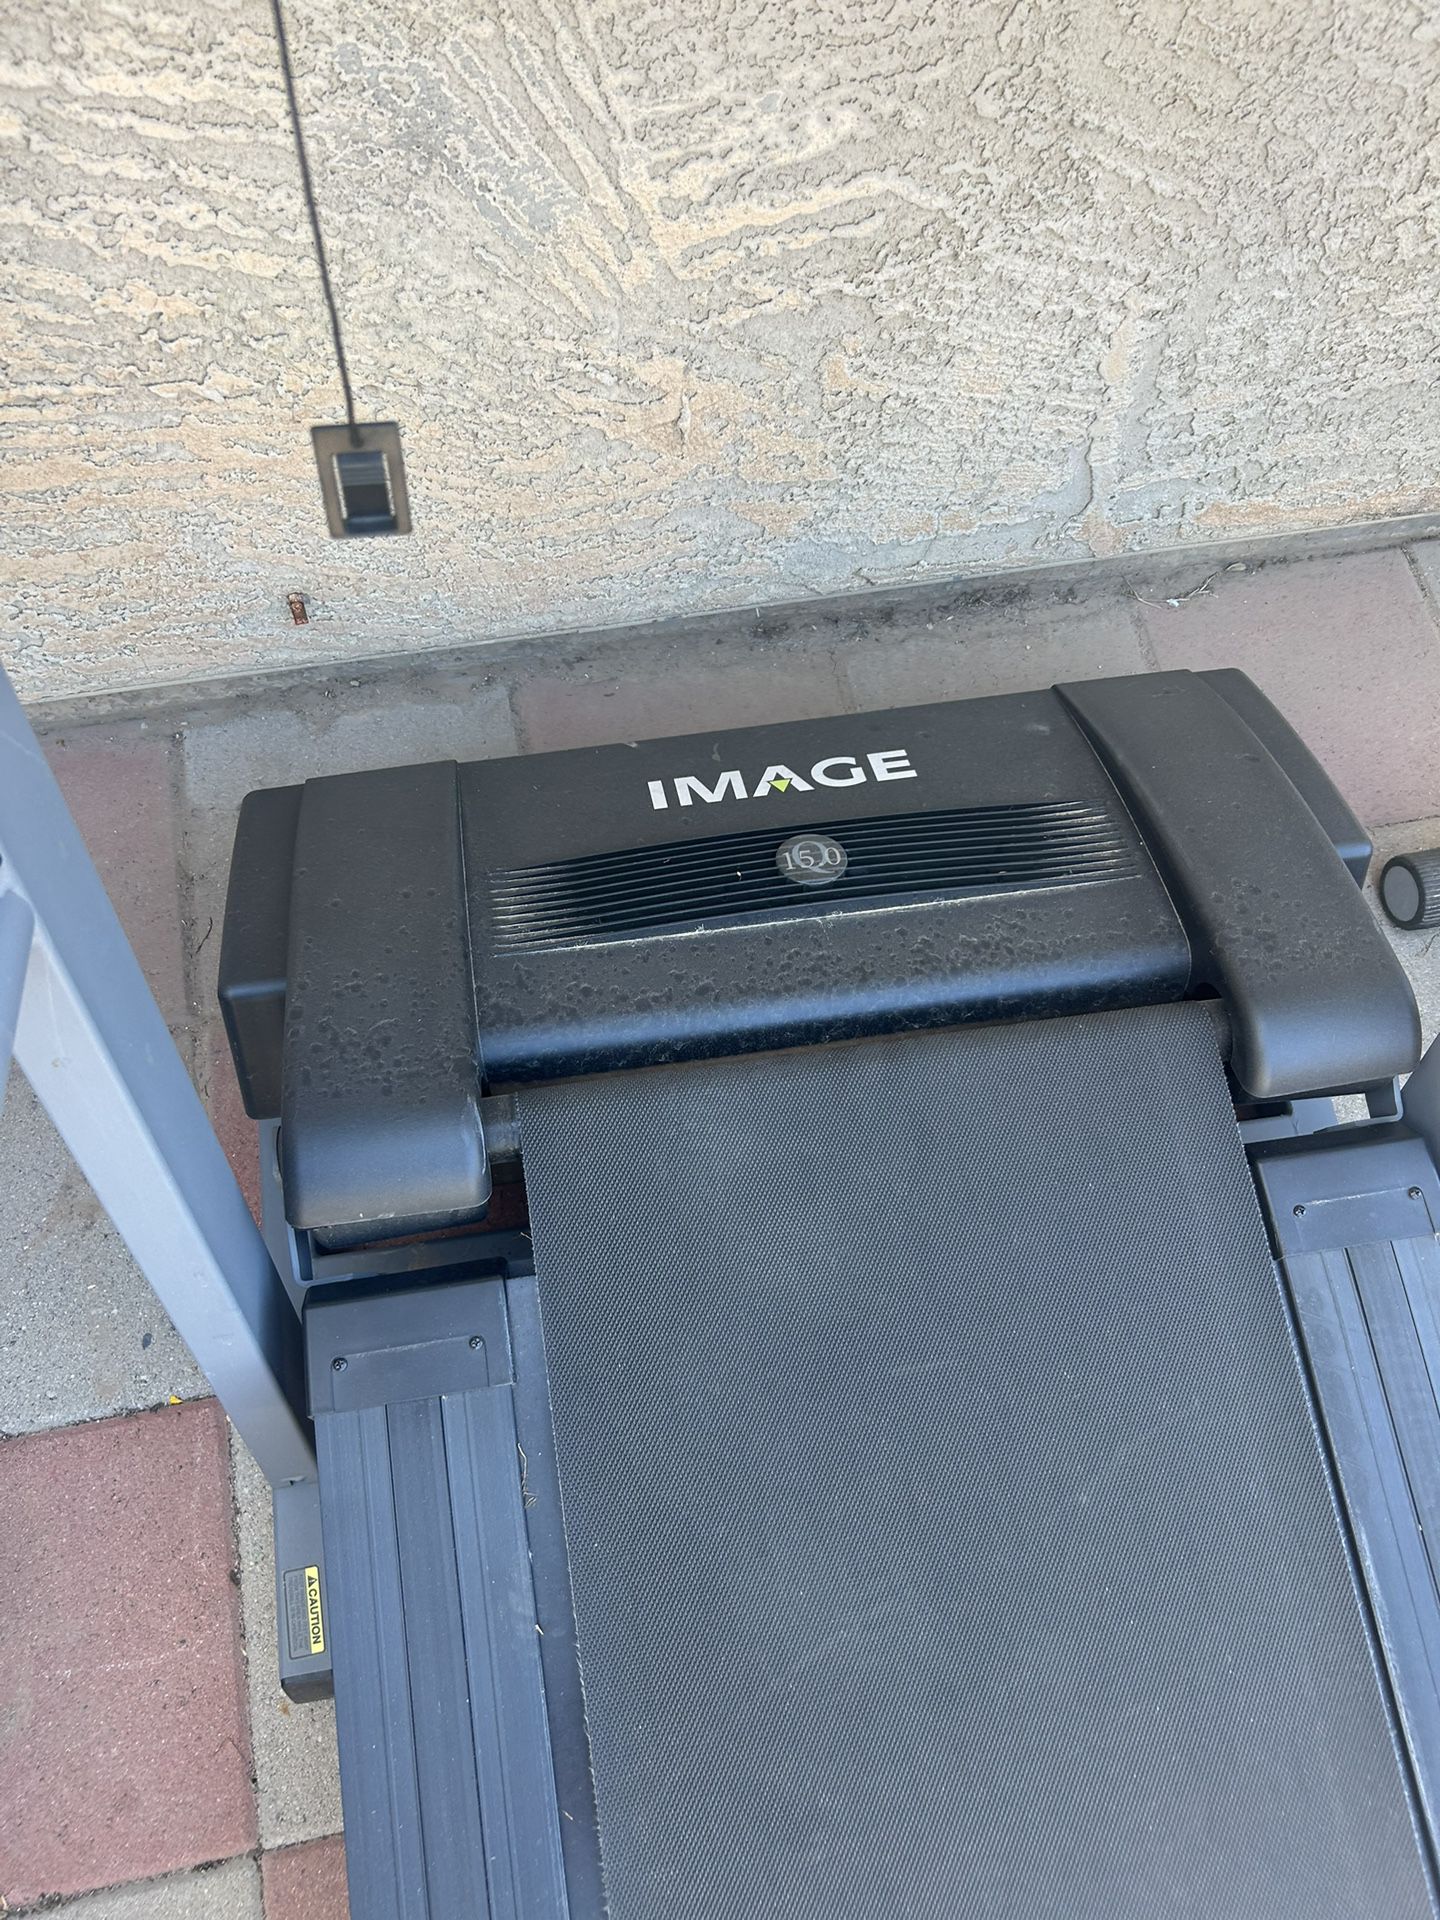 image treadmill